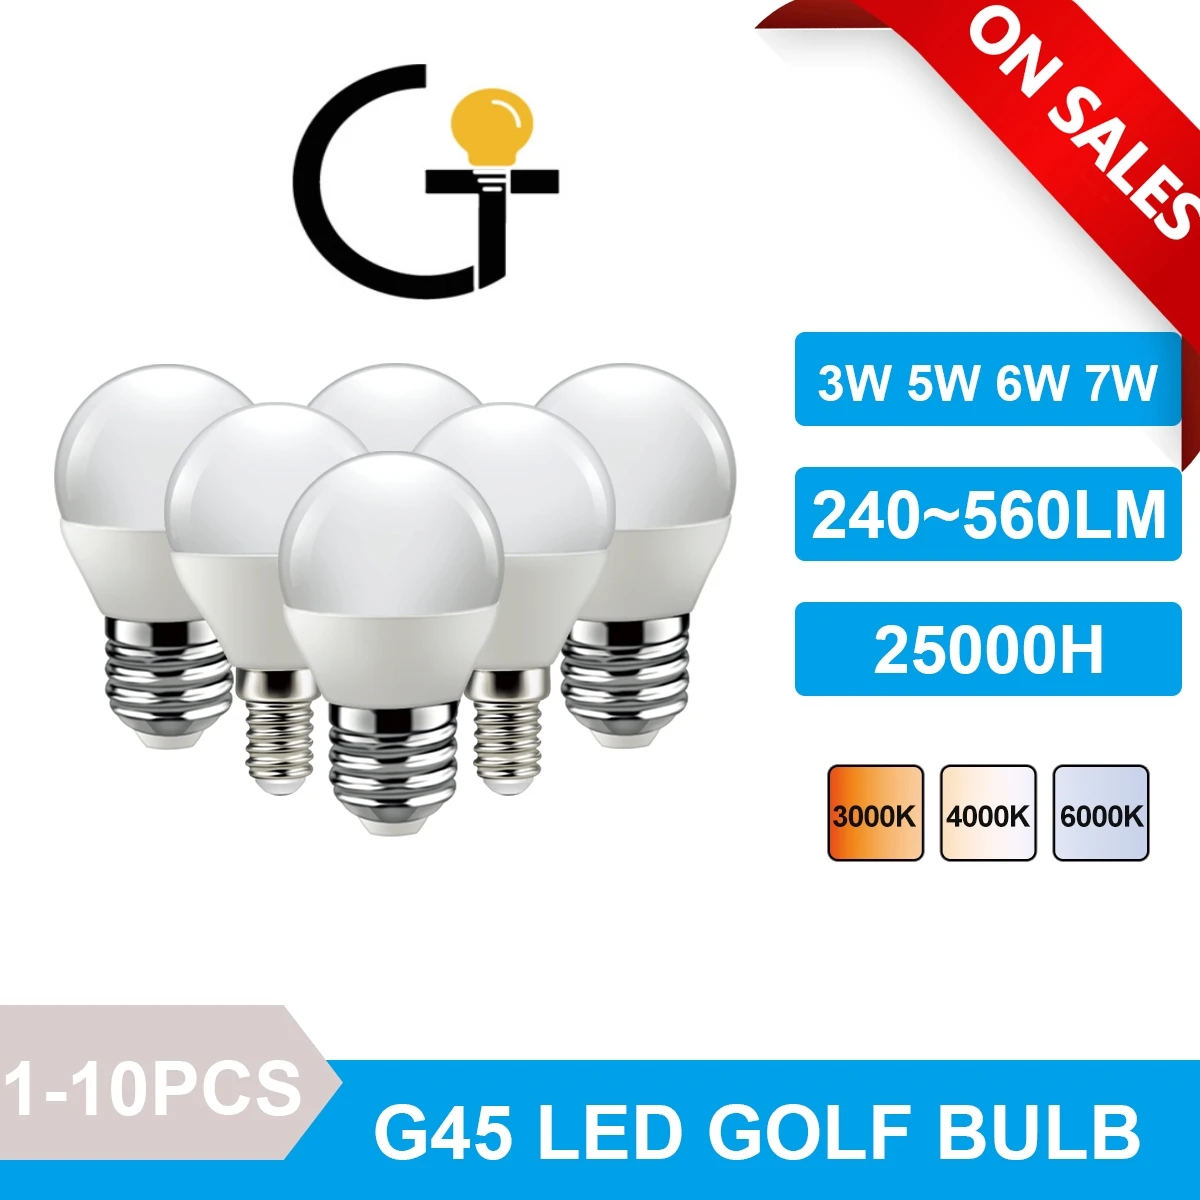 

1-10 Energy-efficient LED Bulbs G45 E14 E27 AC220V-240V 3W 5W 6W 7W 3000K 4000K 6000K 220 Led Golf Bulb Lamp For Home Decoration